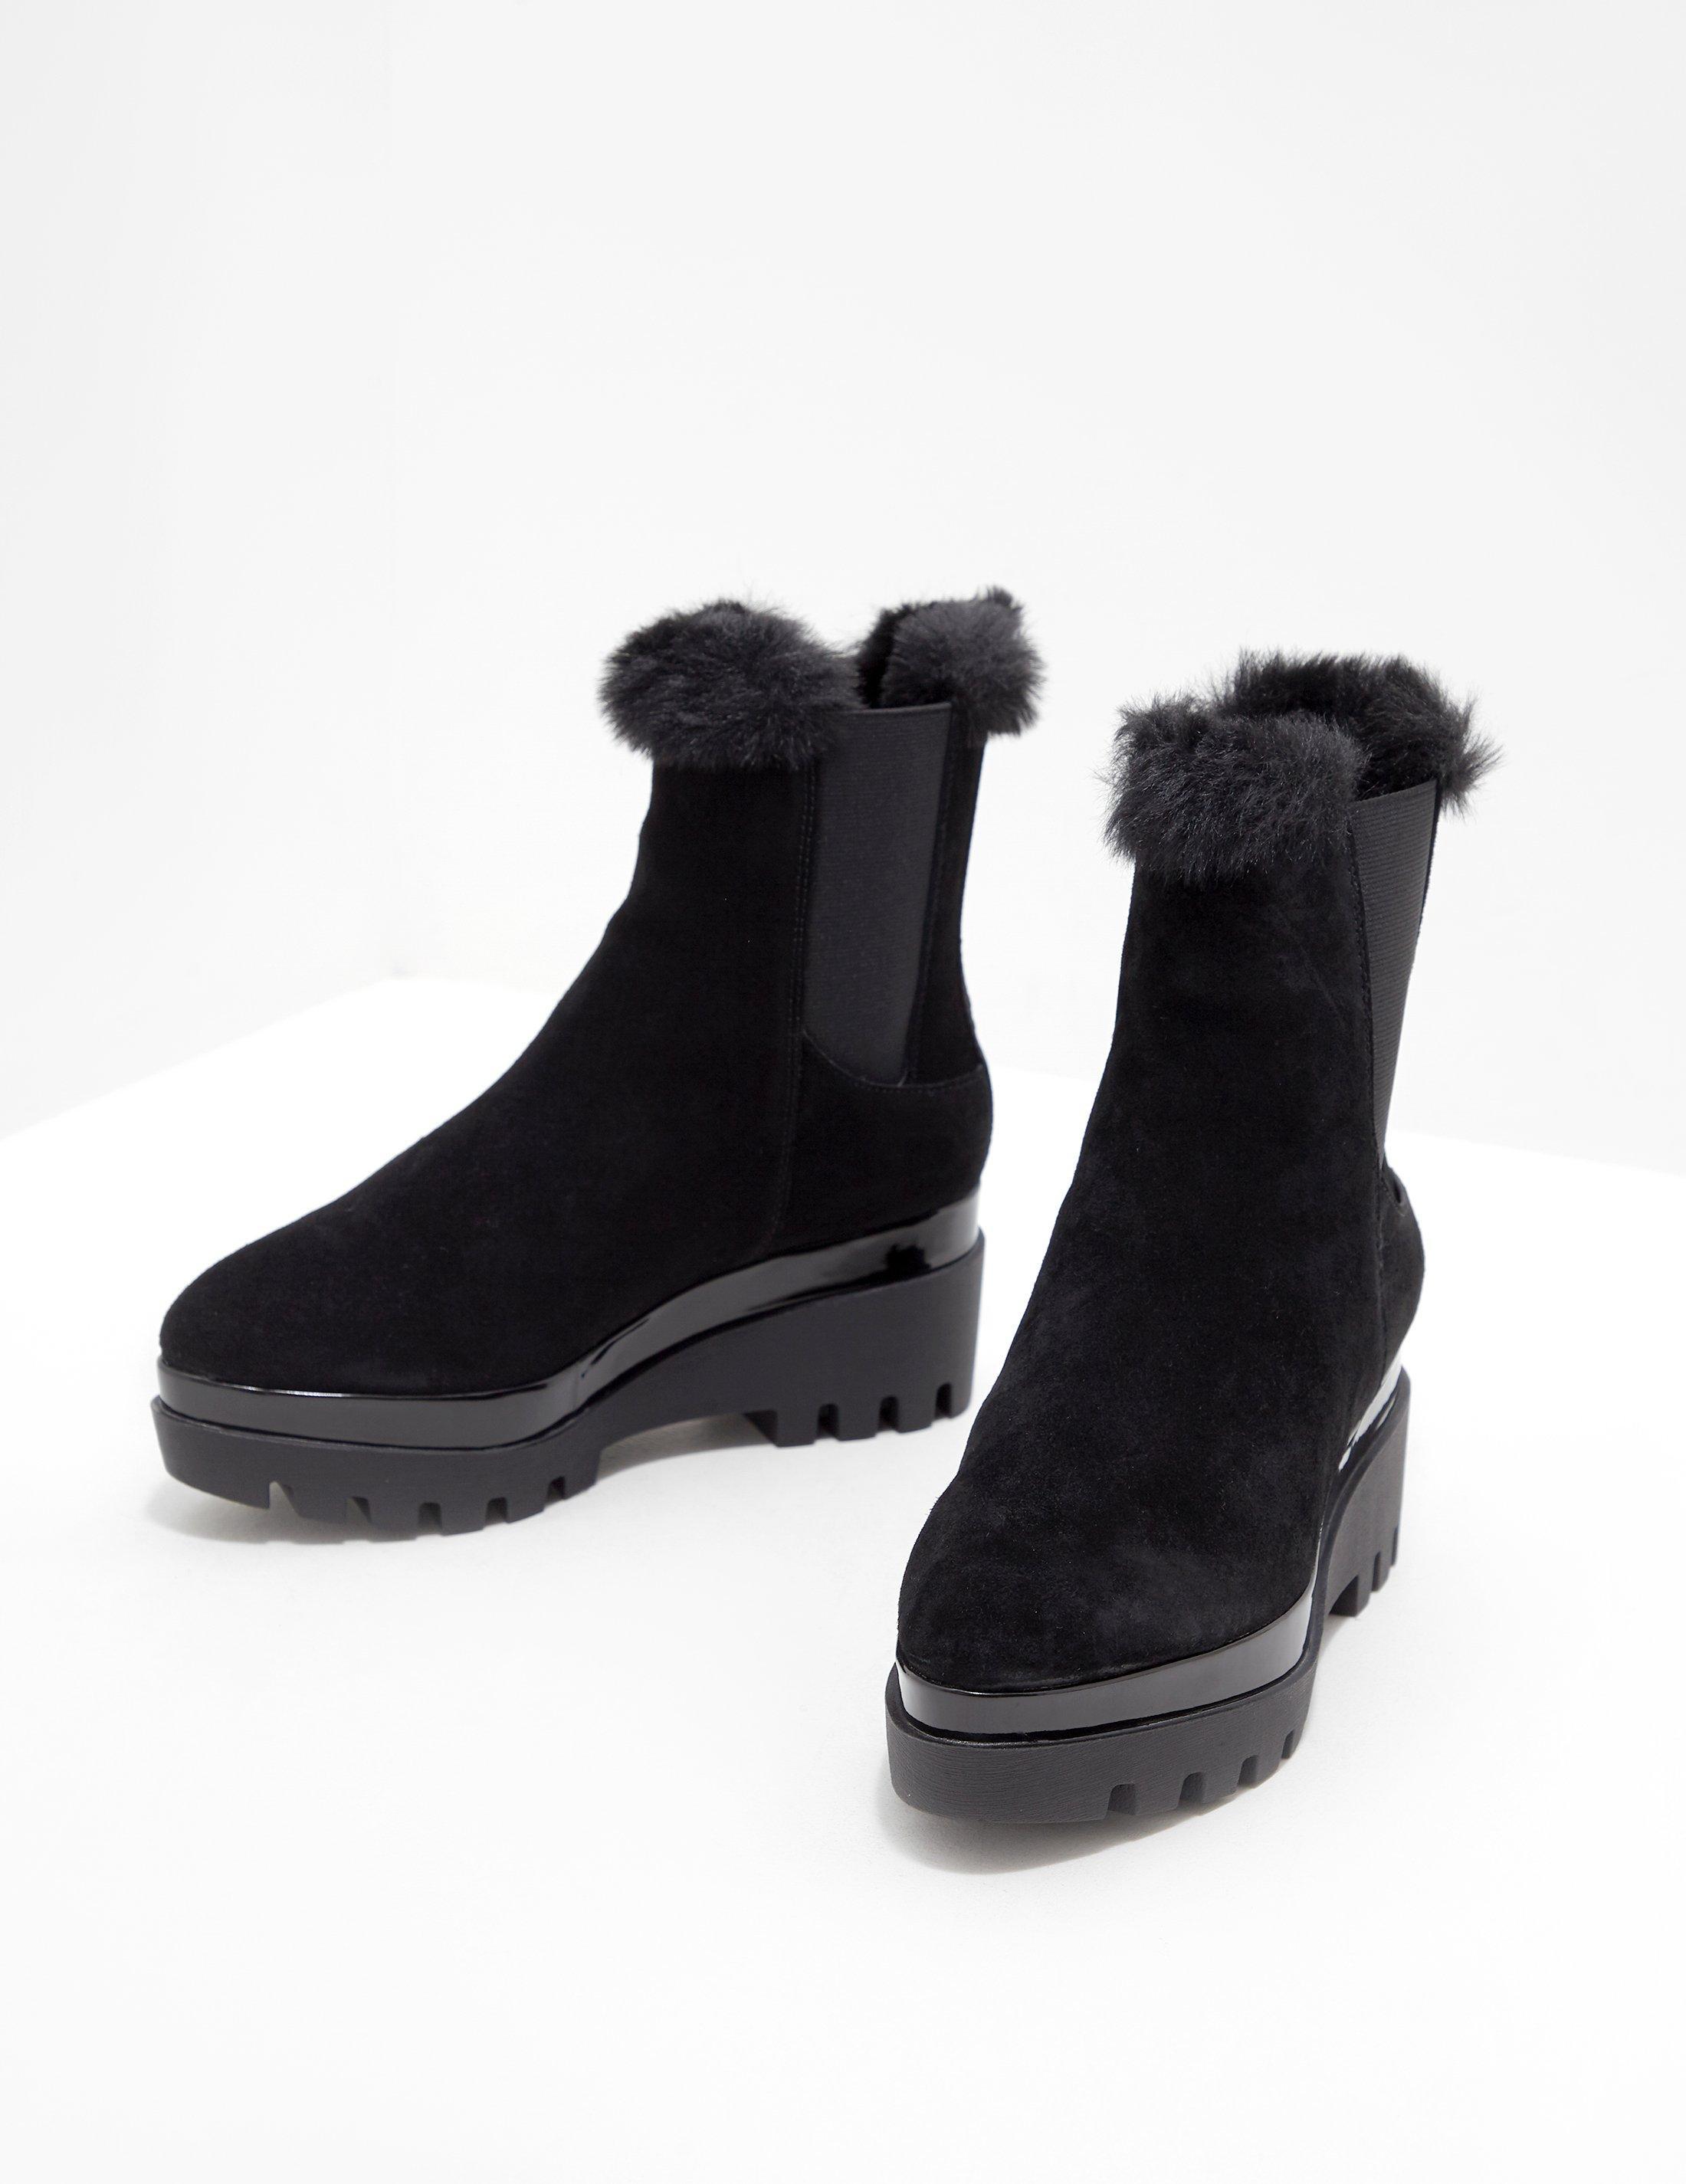 DKNY Womens Bax Wedge Boots Black - Lyst